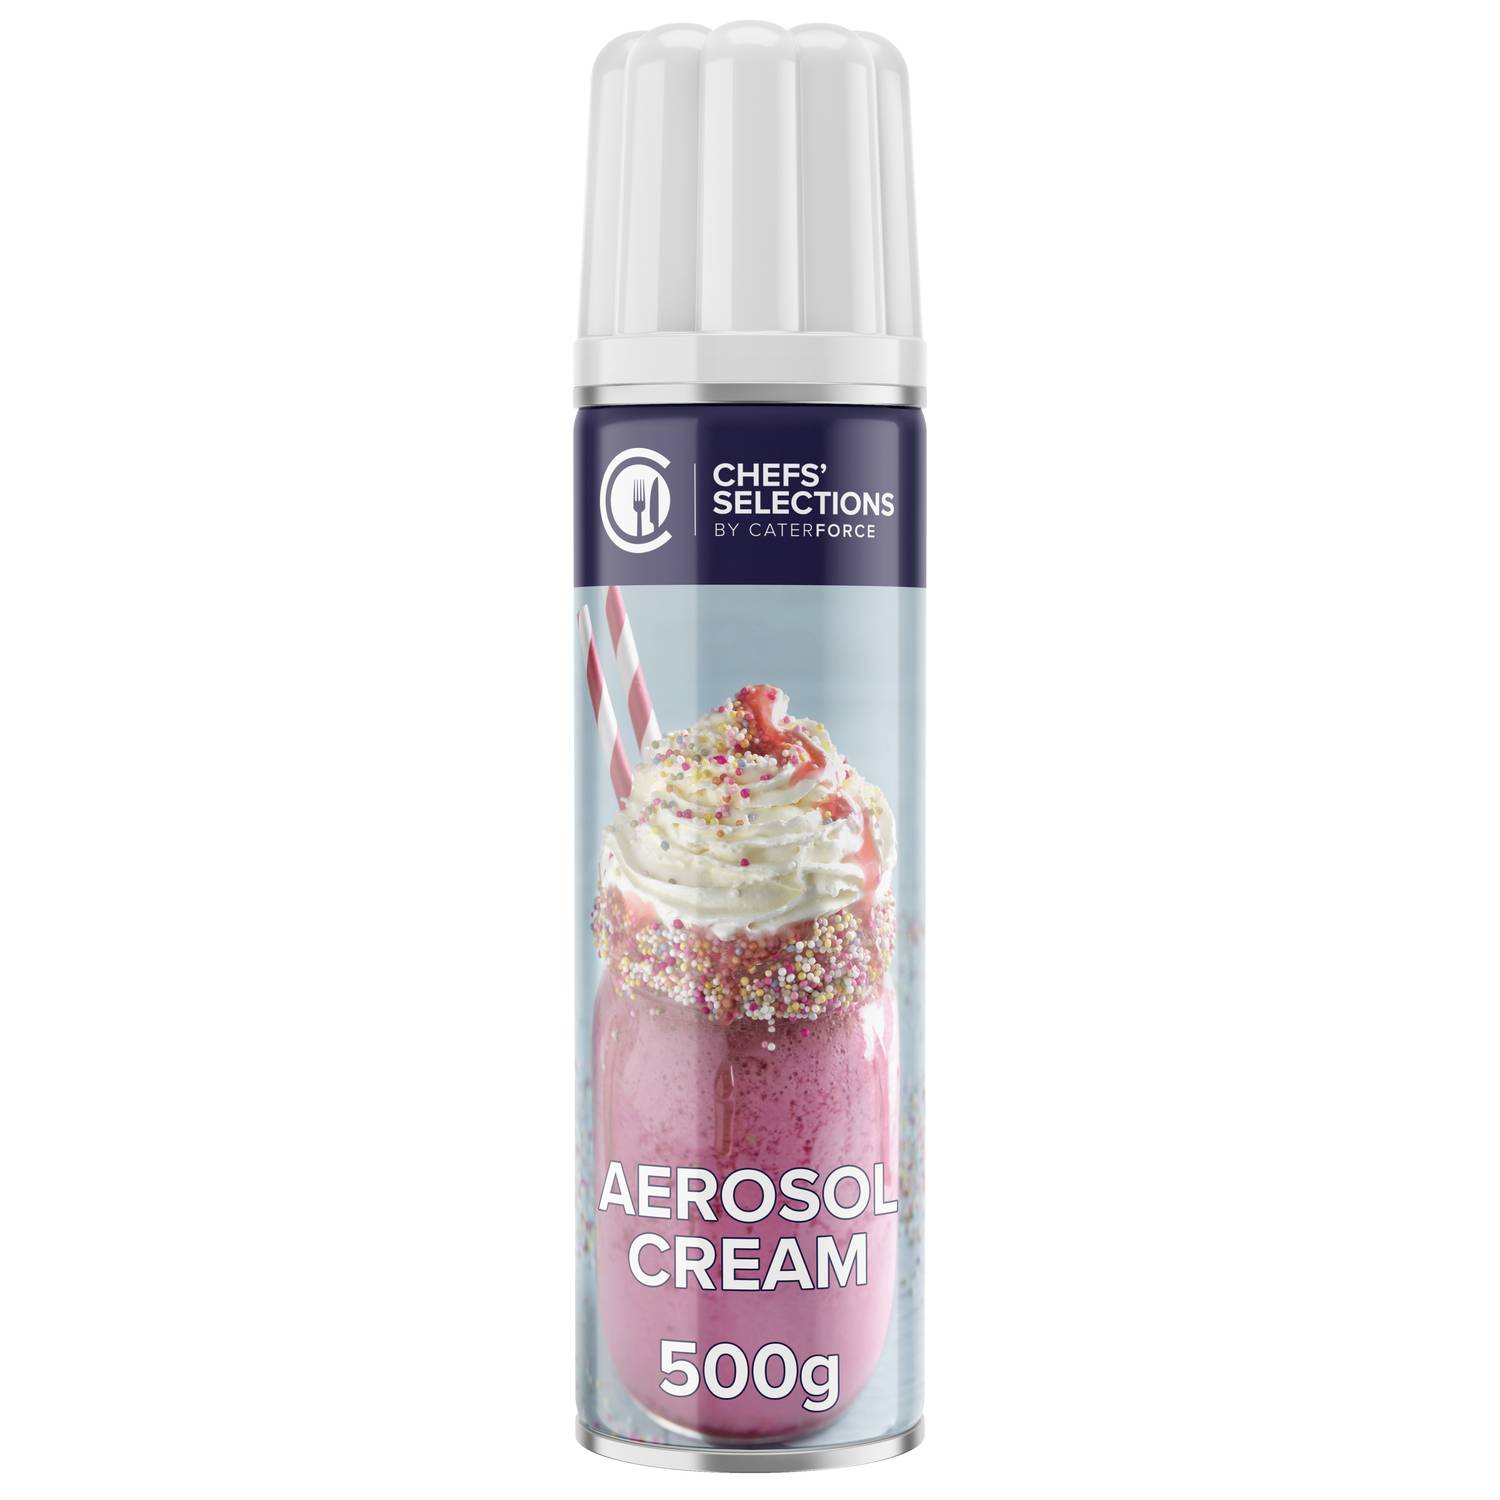 Chefs’ Selections Aerosol Cream (6 x 500g)